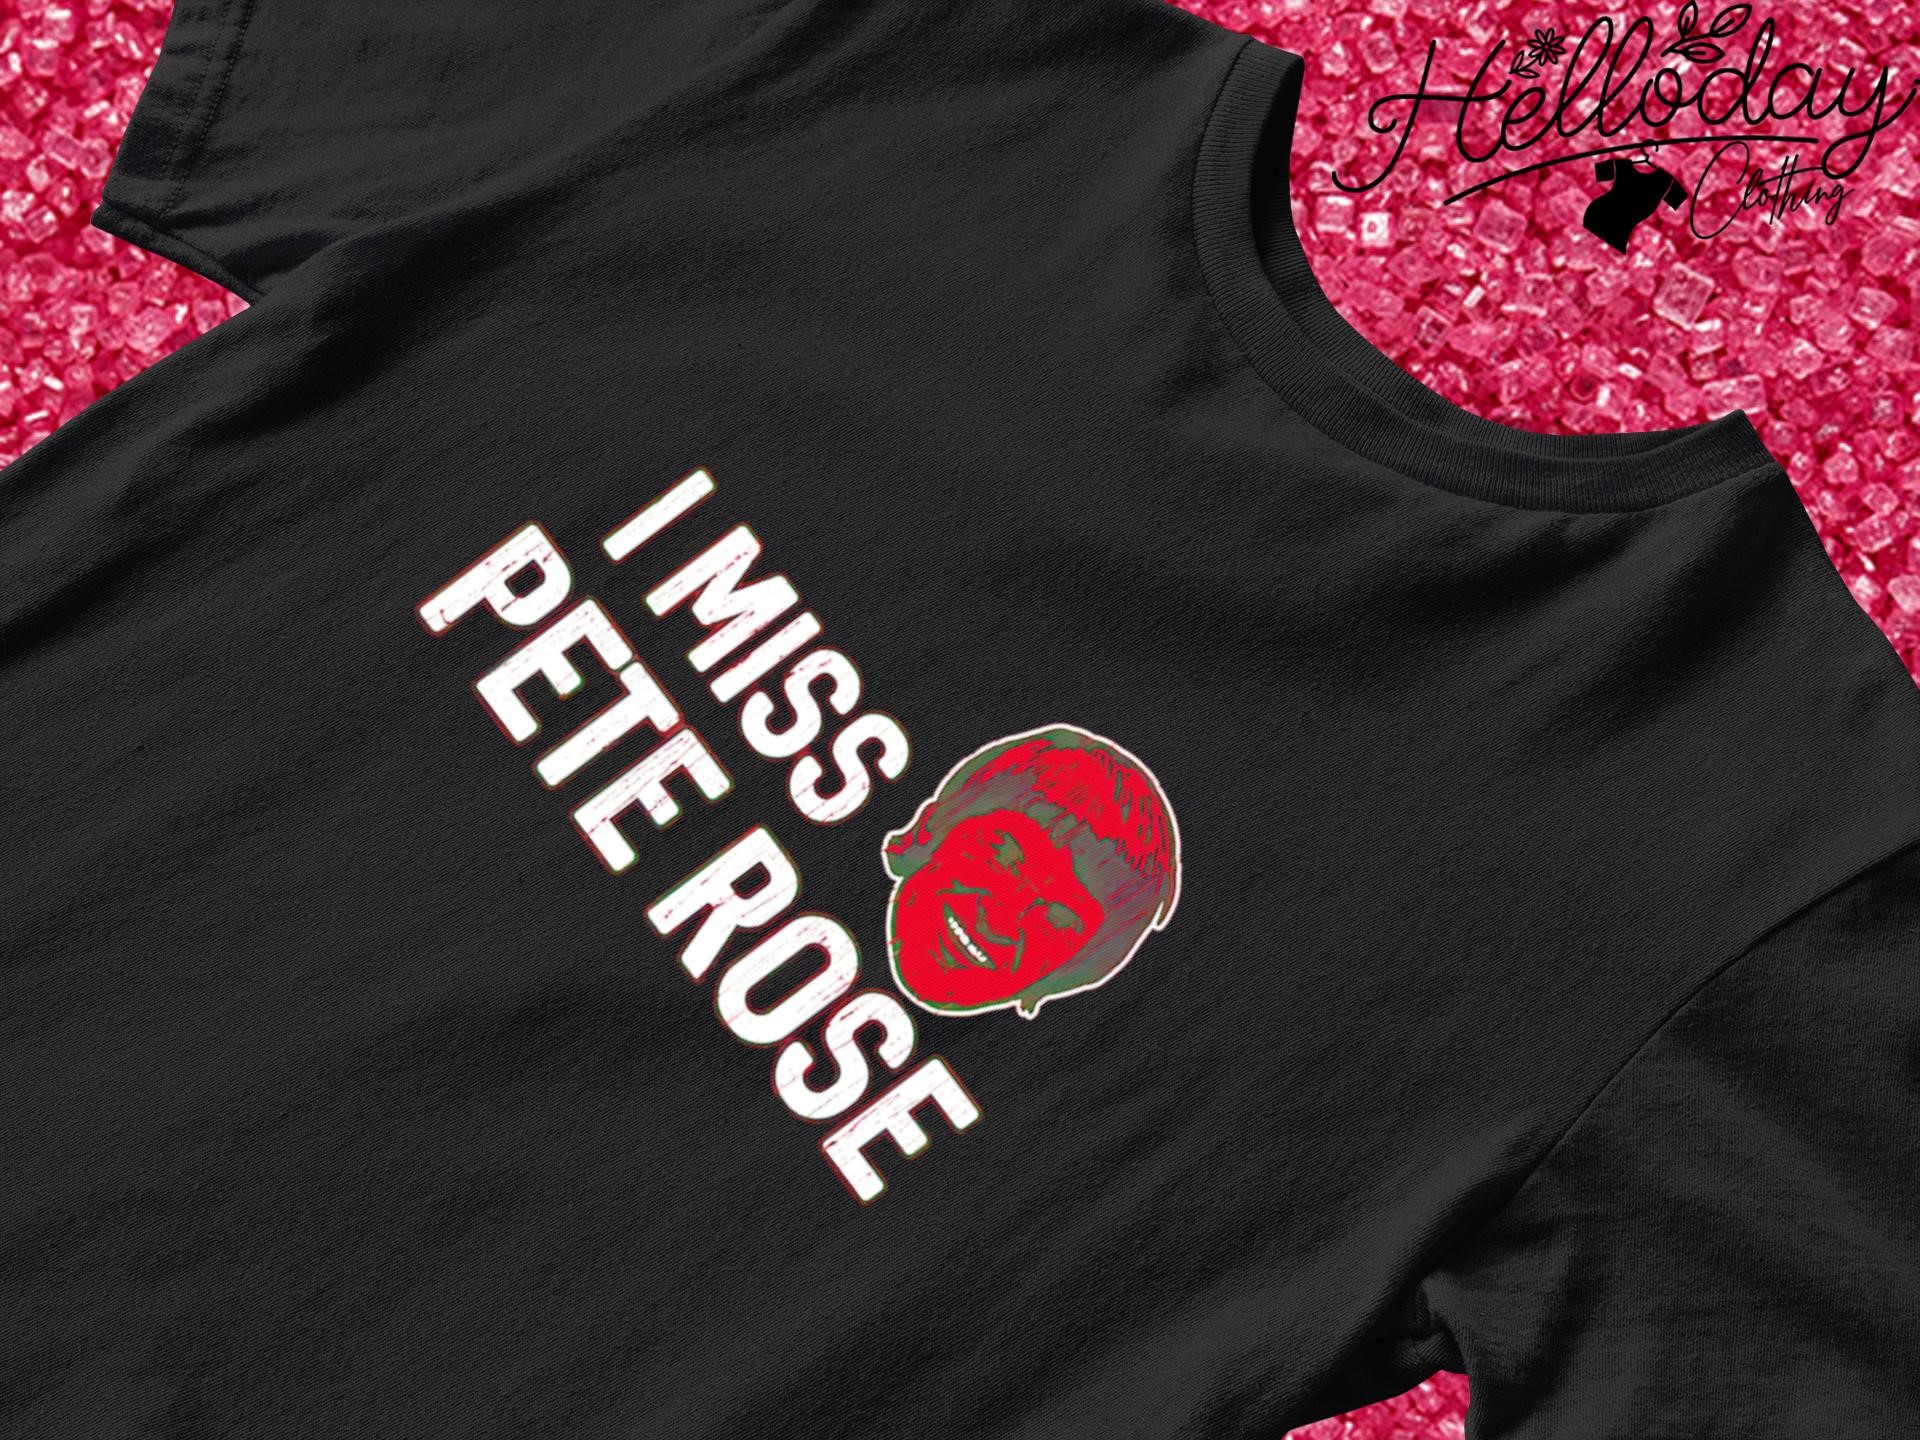 I miss pete rose Cincinnati Reds shirt